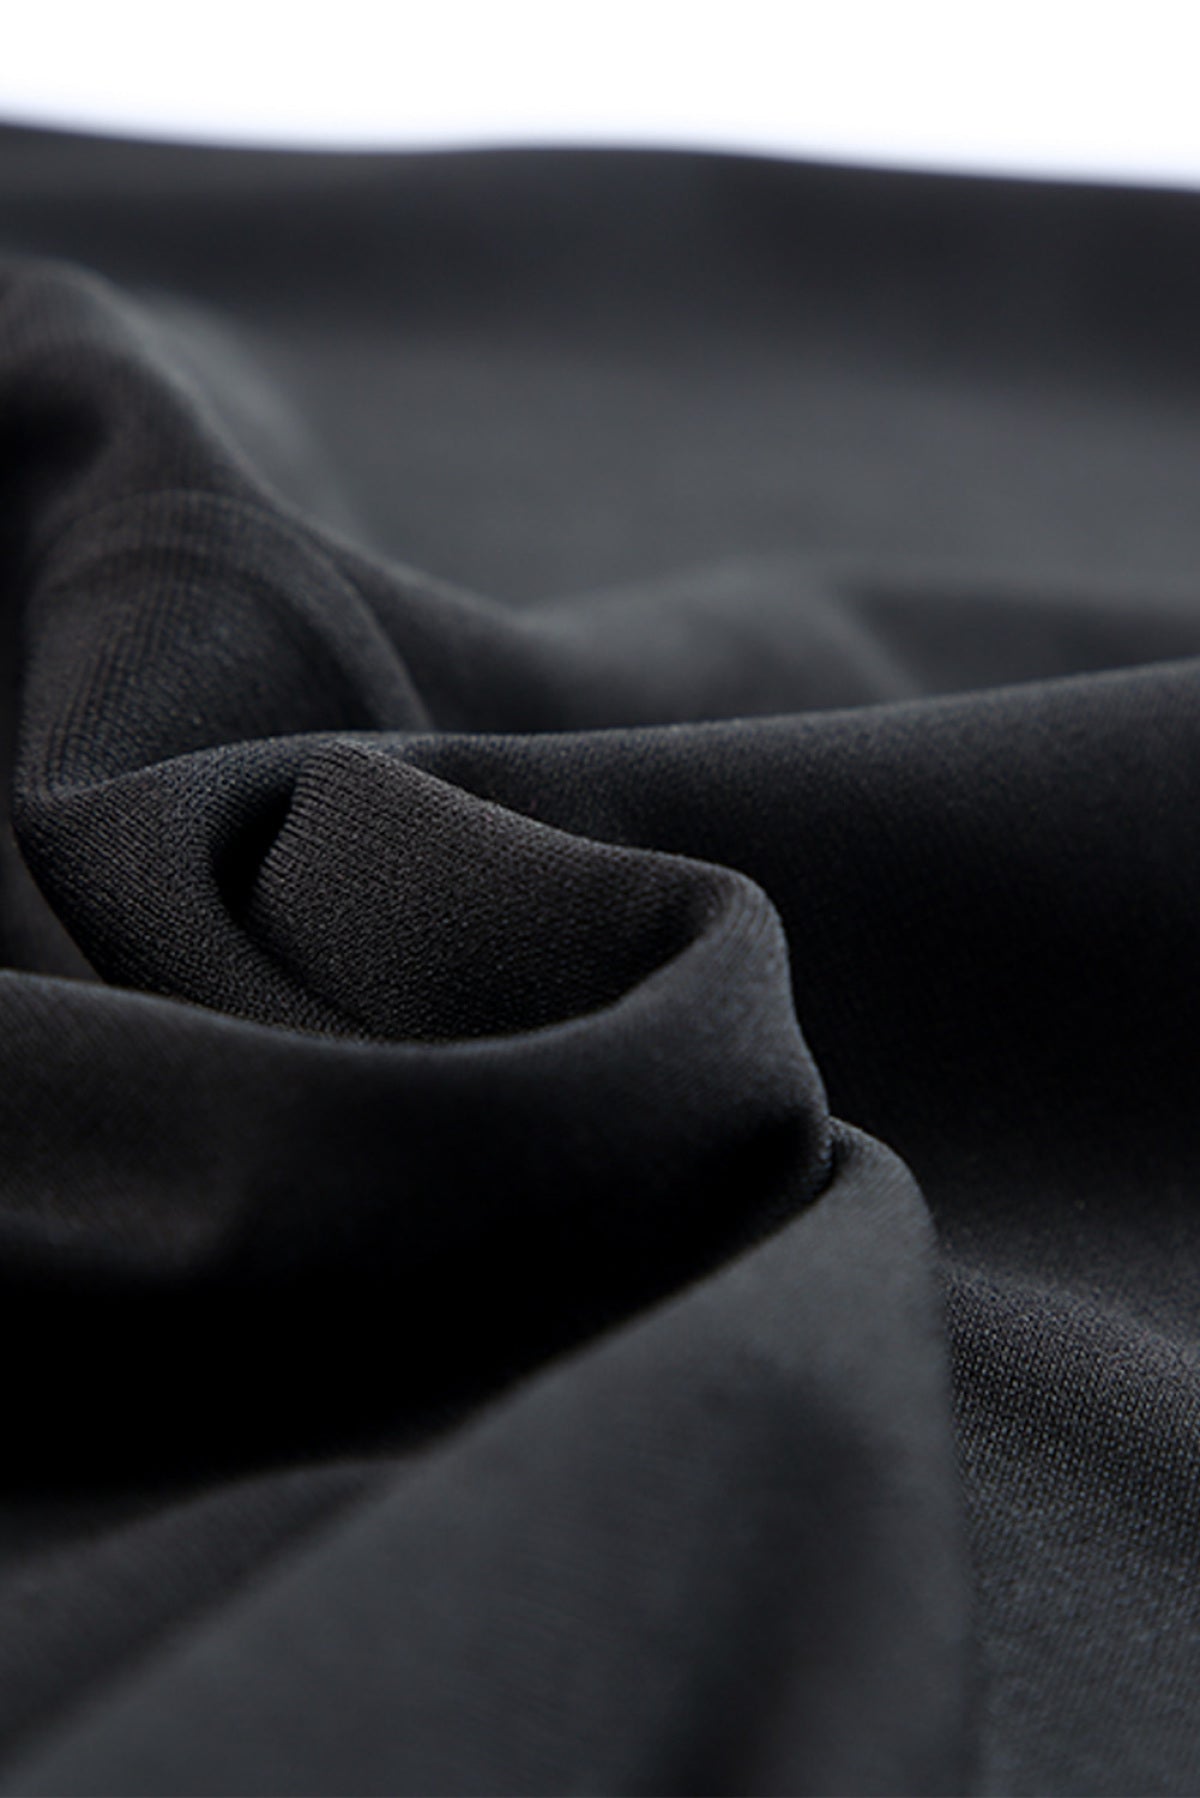 Black Lace Crochet Cut Out Ruffled High Waist Bodycon Dress